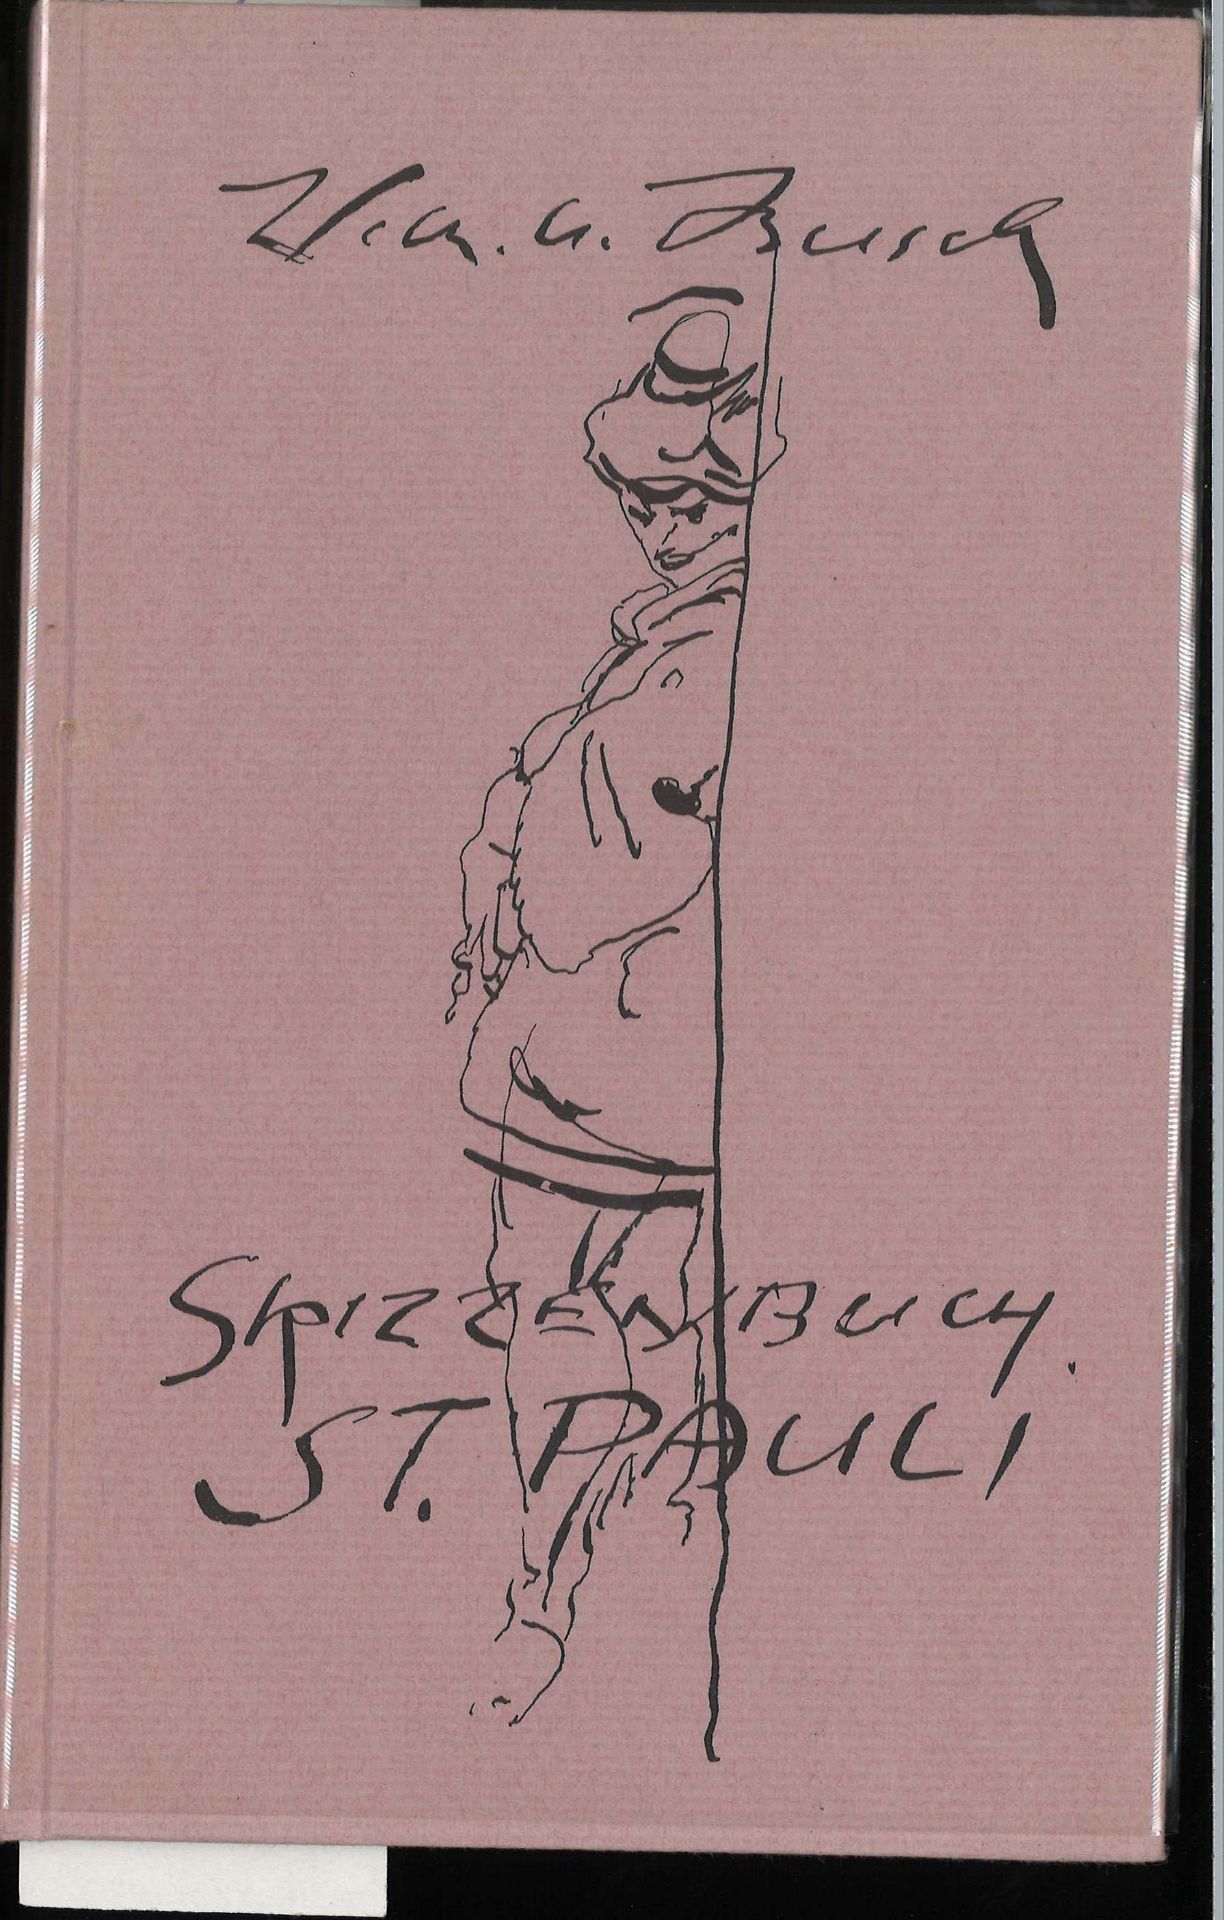 W. M. Busch - Skizzenbuch St. Pauli, Edition Curt Visel